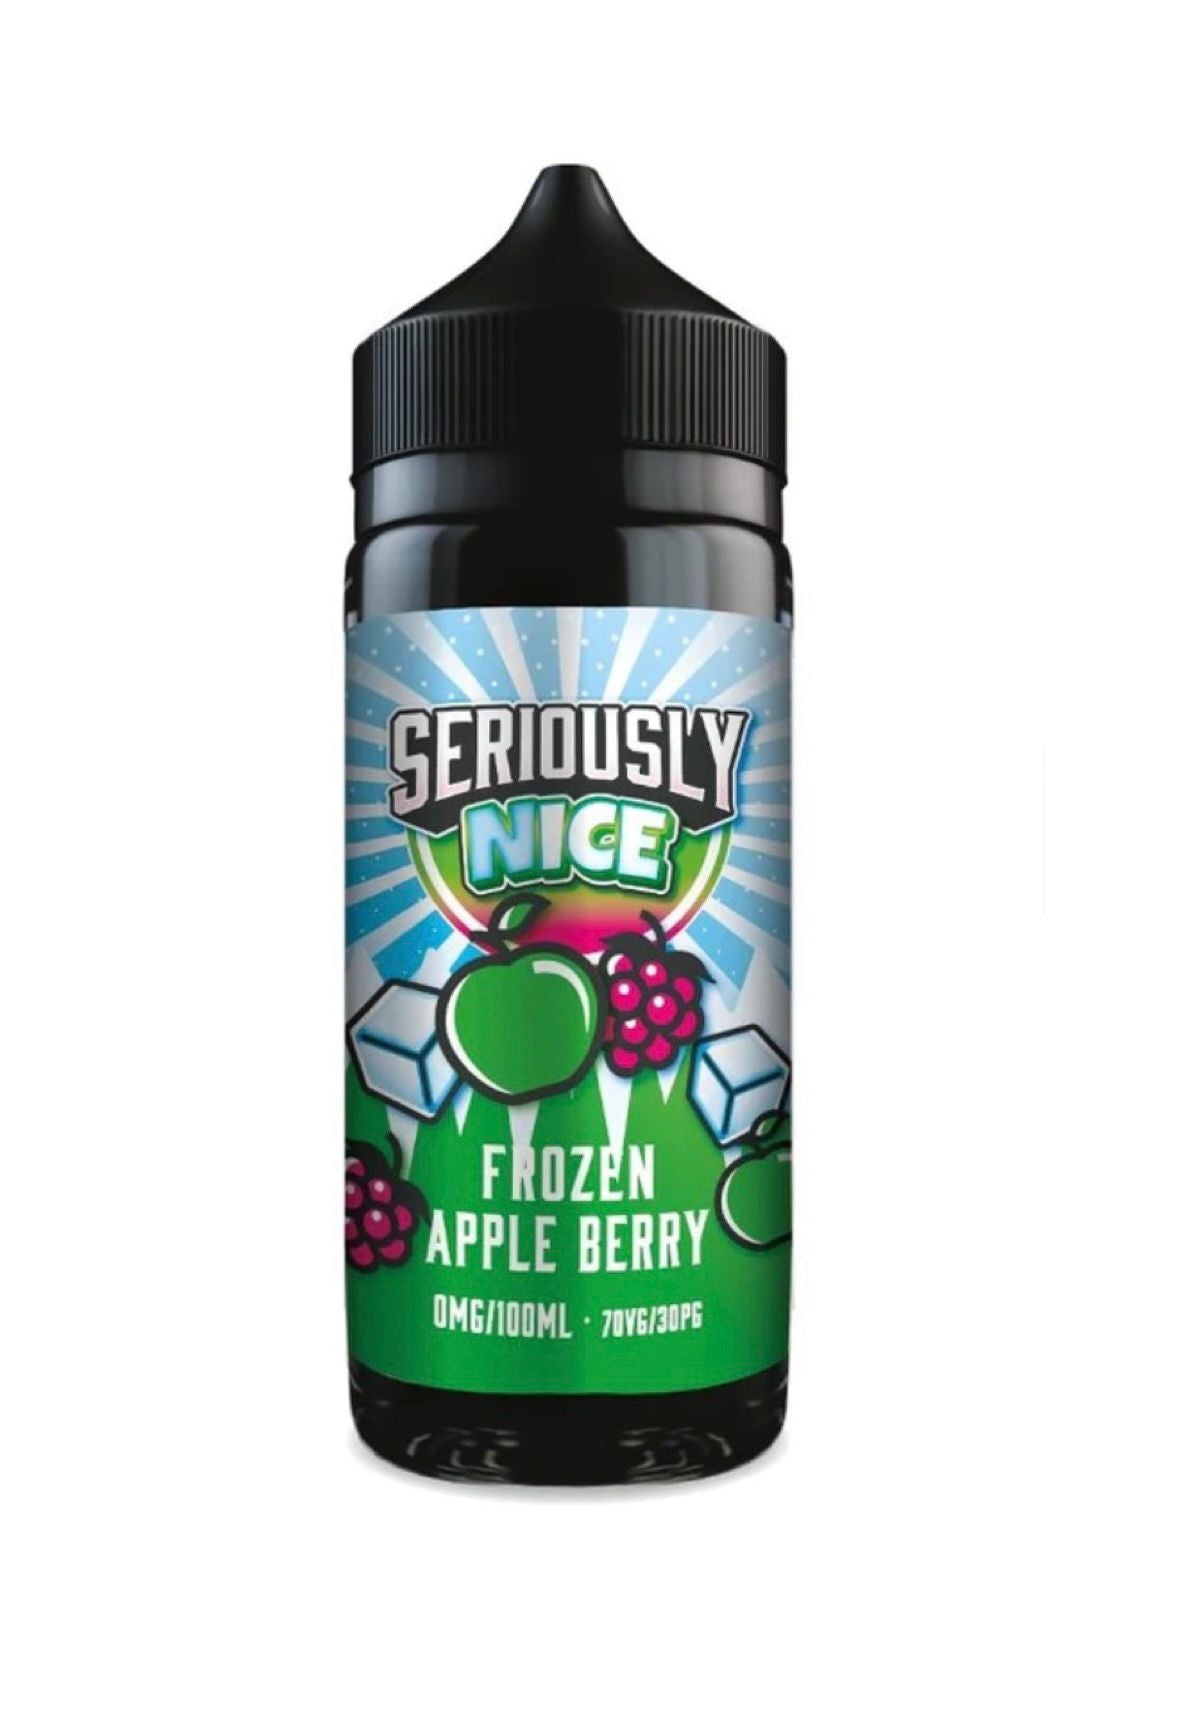 Frozen Apple Berry Seriously Nice 100ml Shortfill